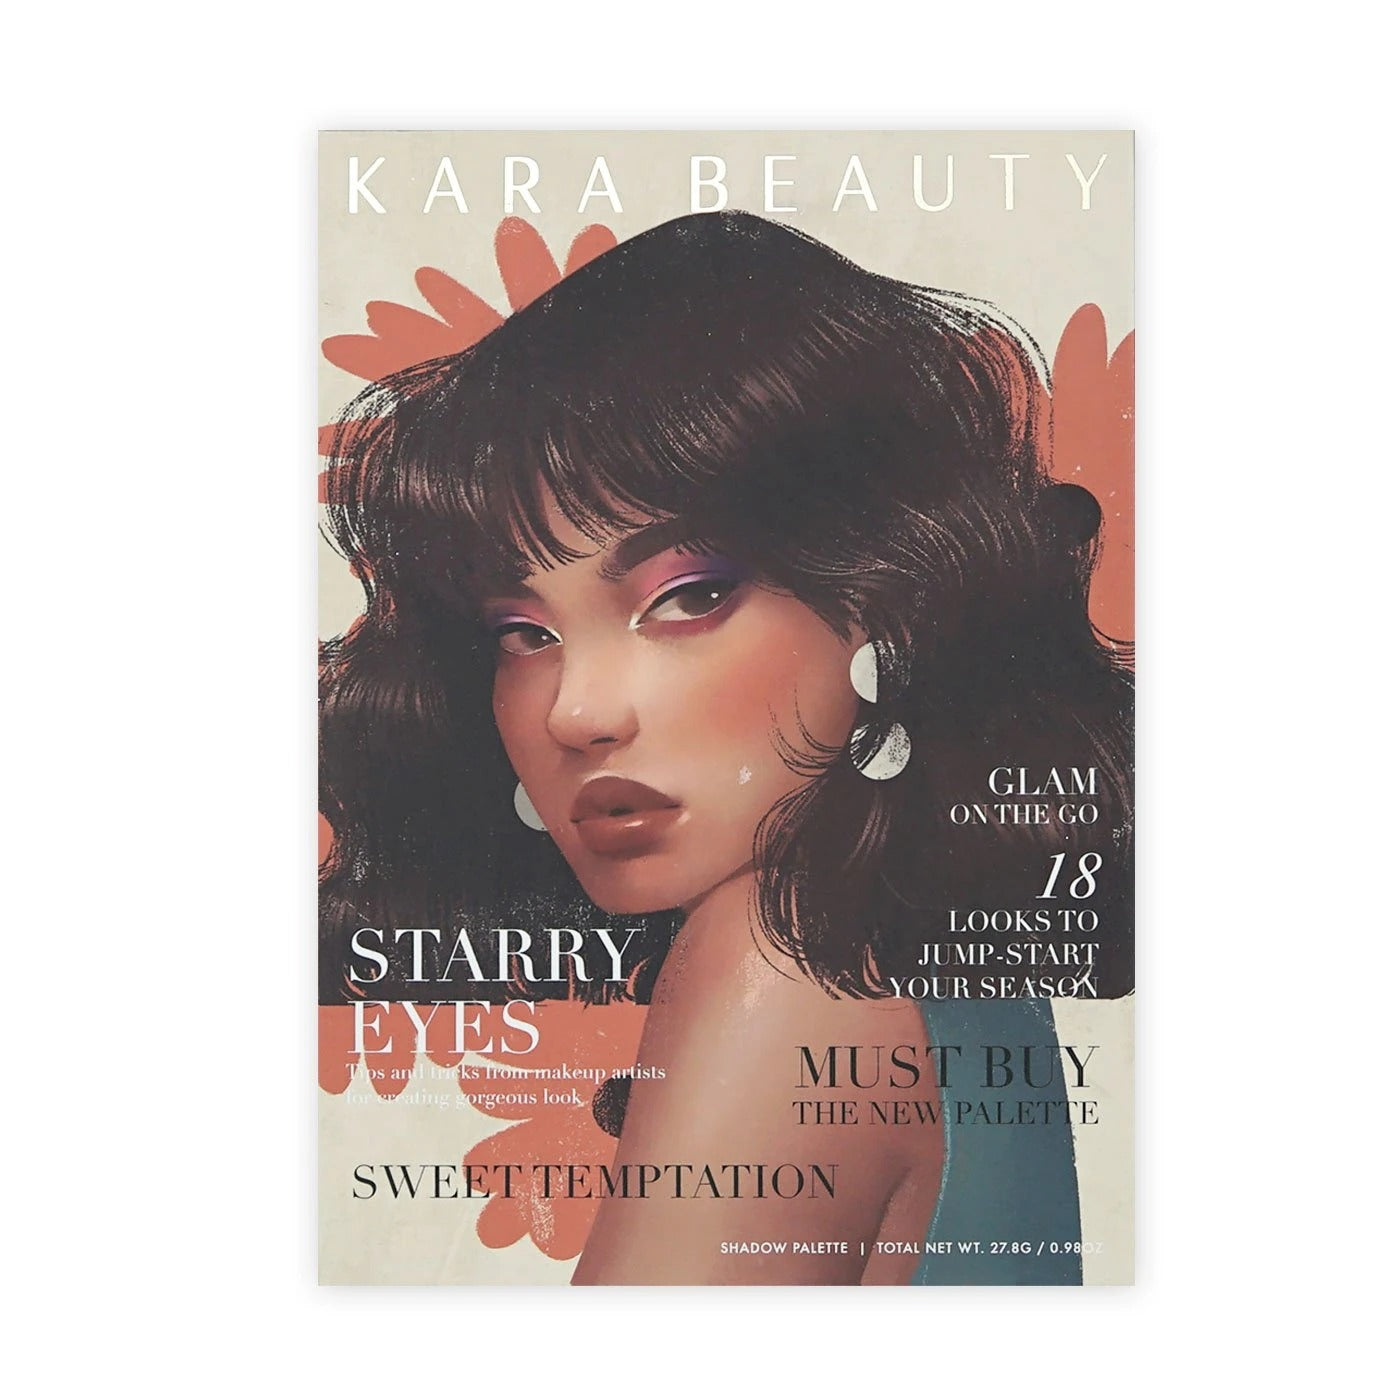 Kara Beauty Starry Eyes Eyeshadow Palette